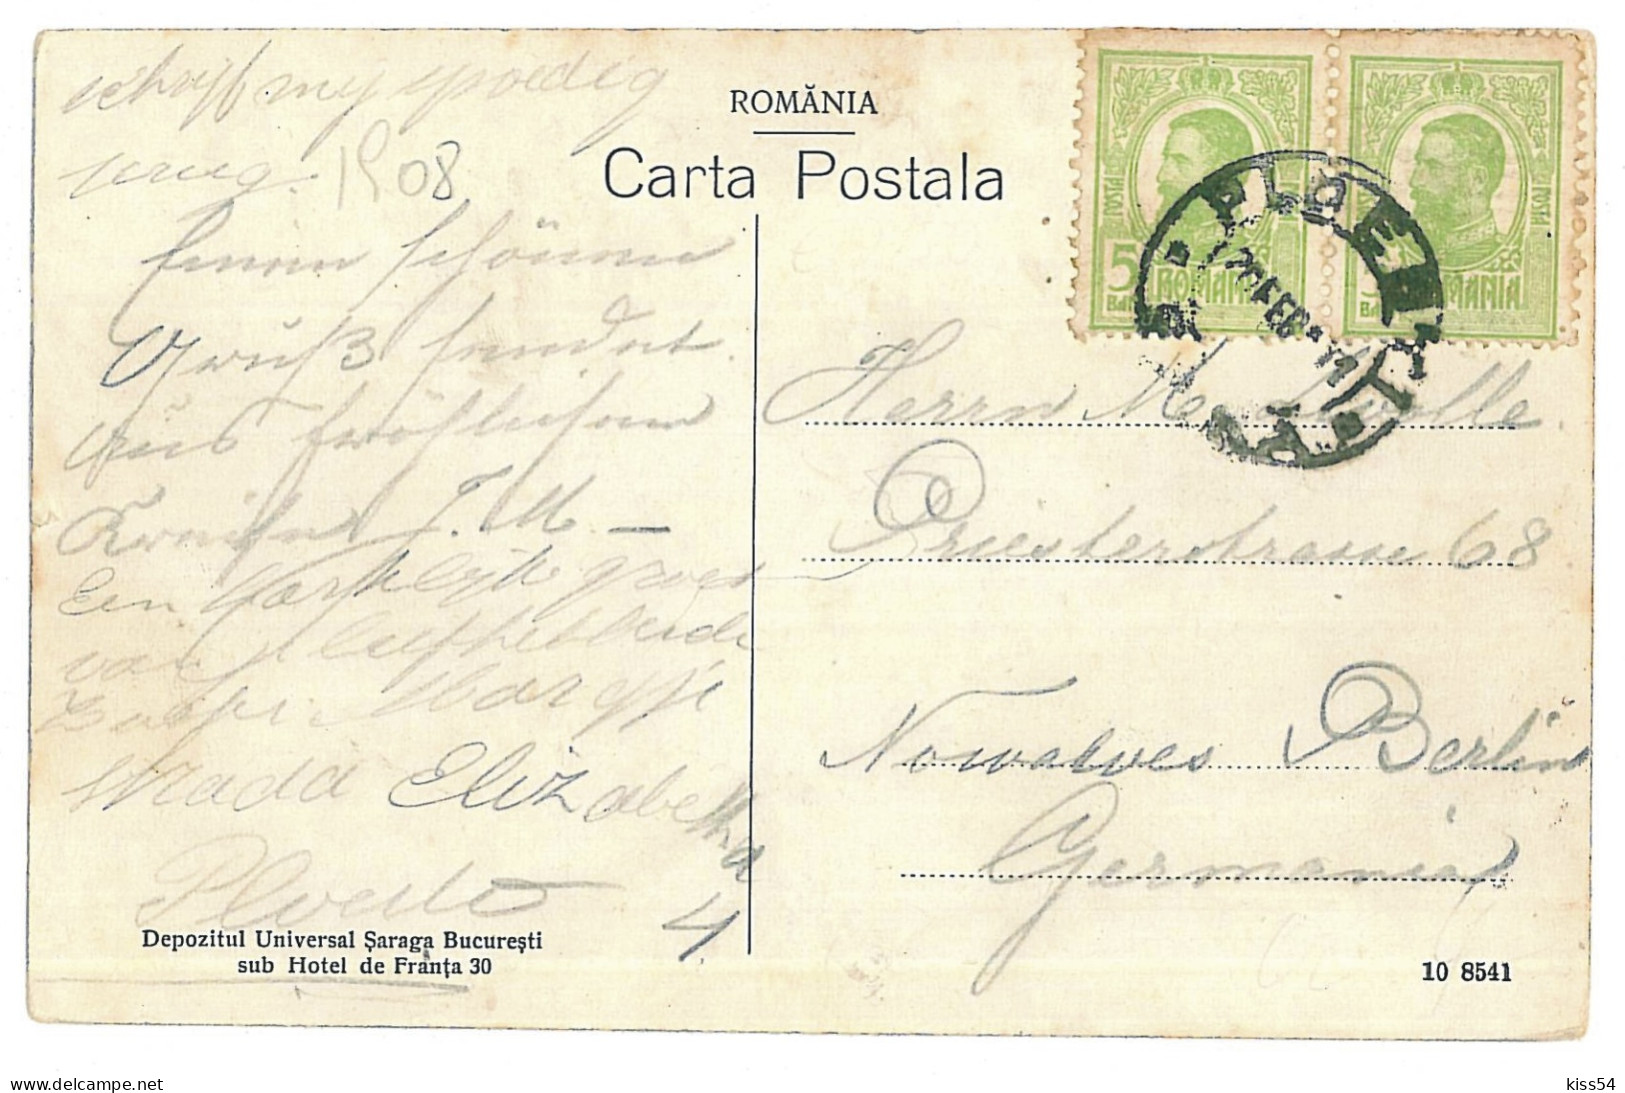 RO 84 - 11493 PLOIESTI, Market, Romania - Old Postcard - Used - 1908 - Romania